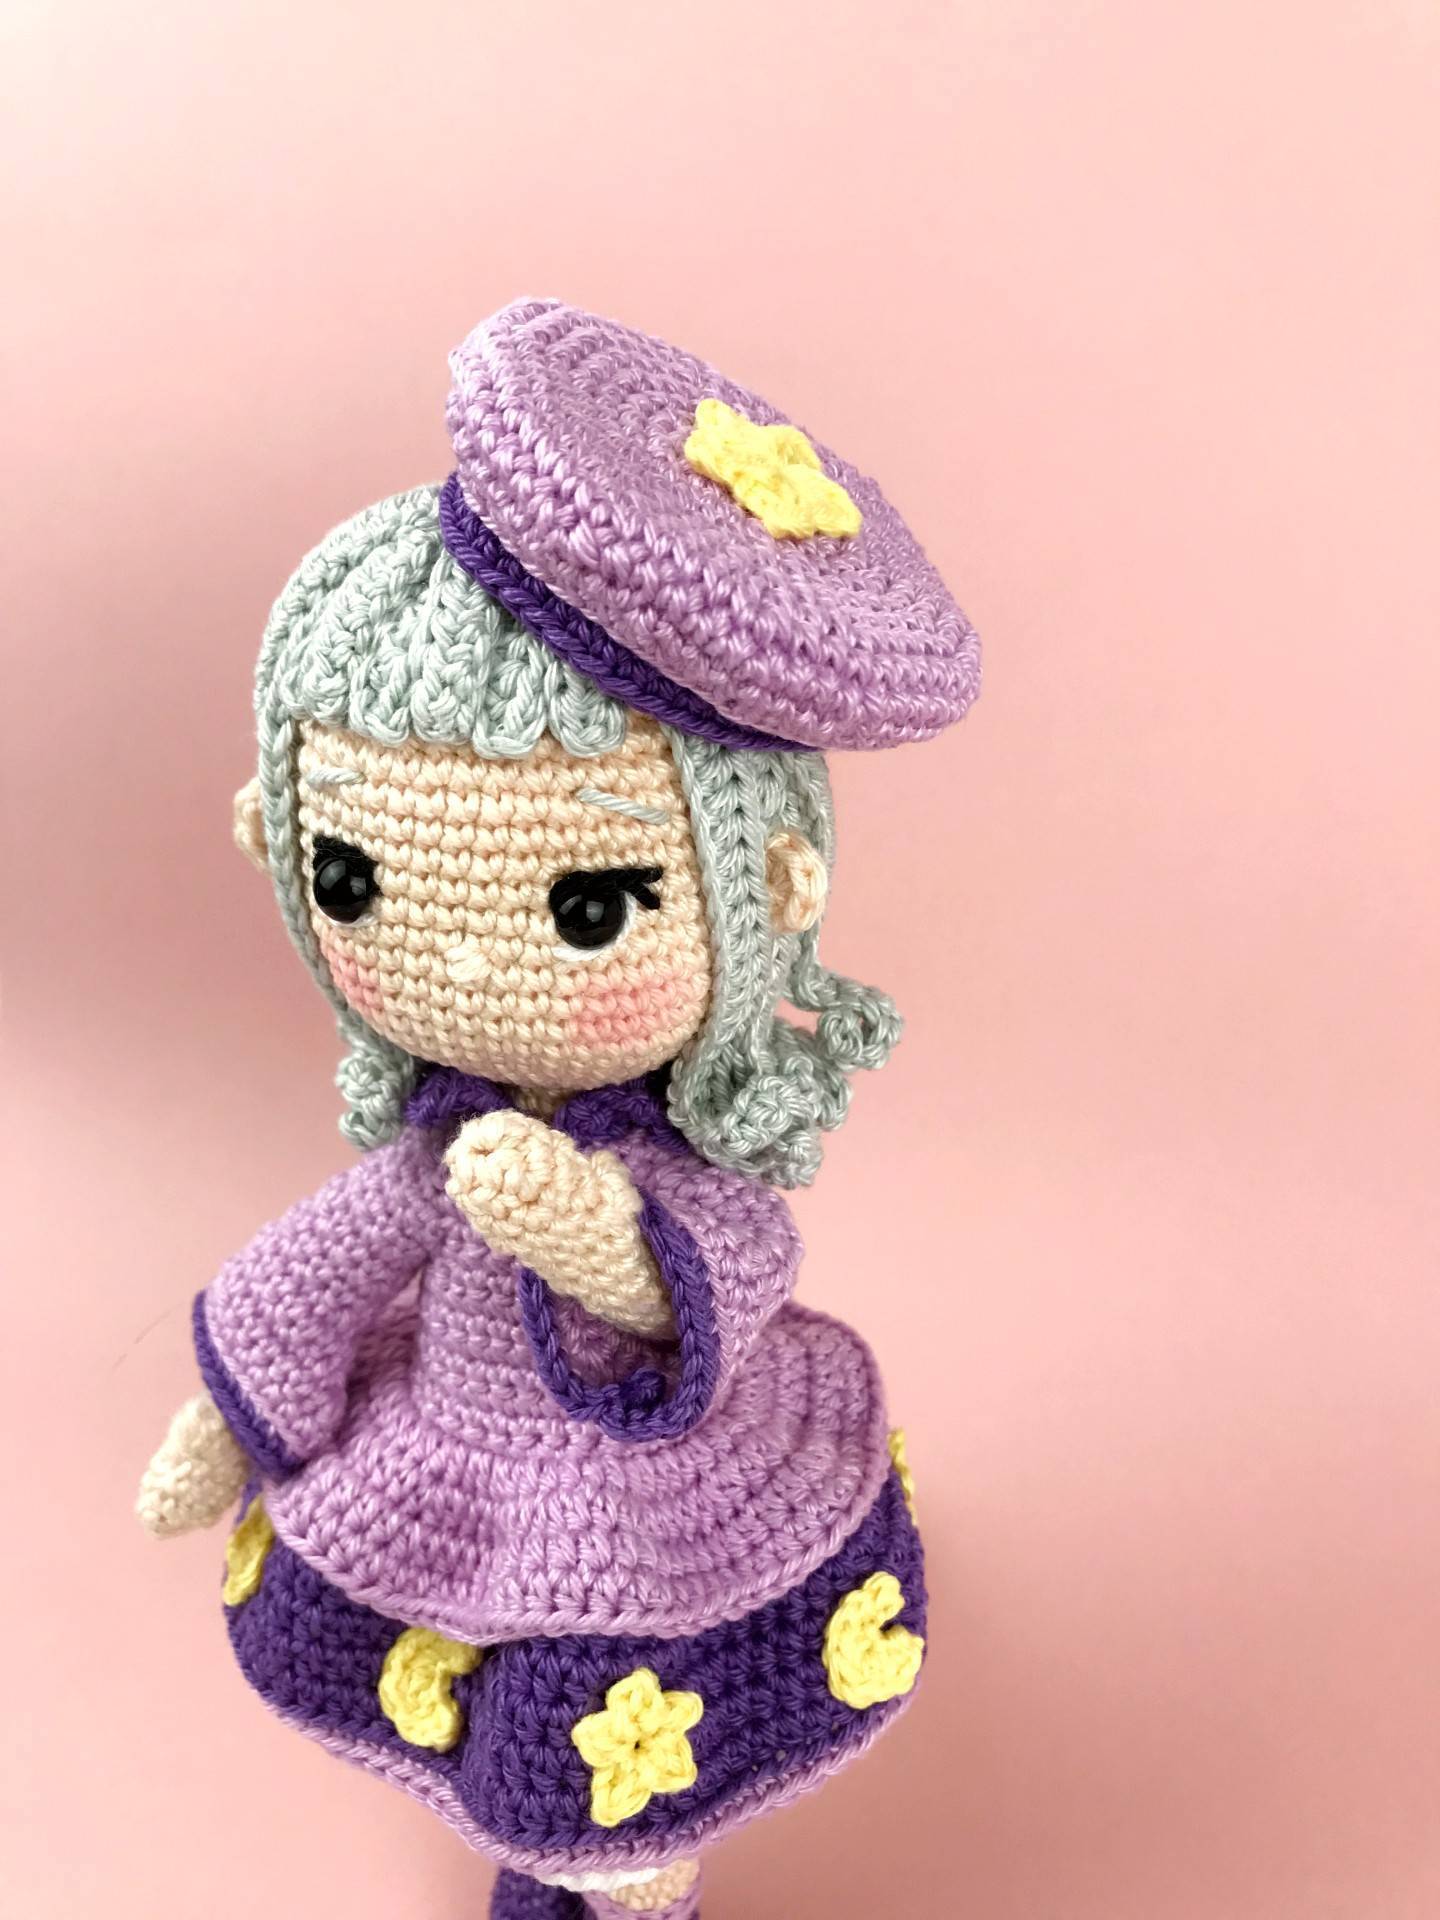 Starrya, girl from stars - Crochet Amigurumi pattern - My Rainbow